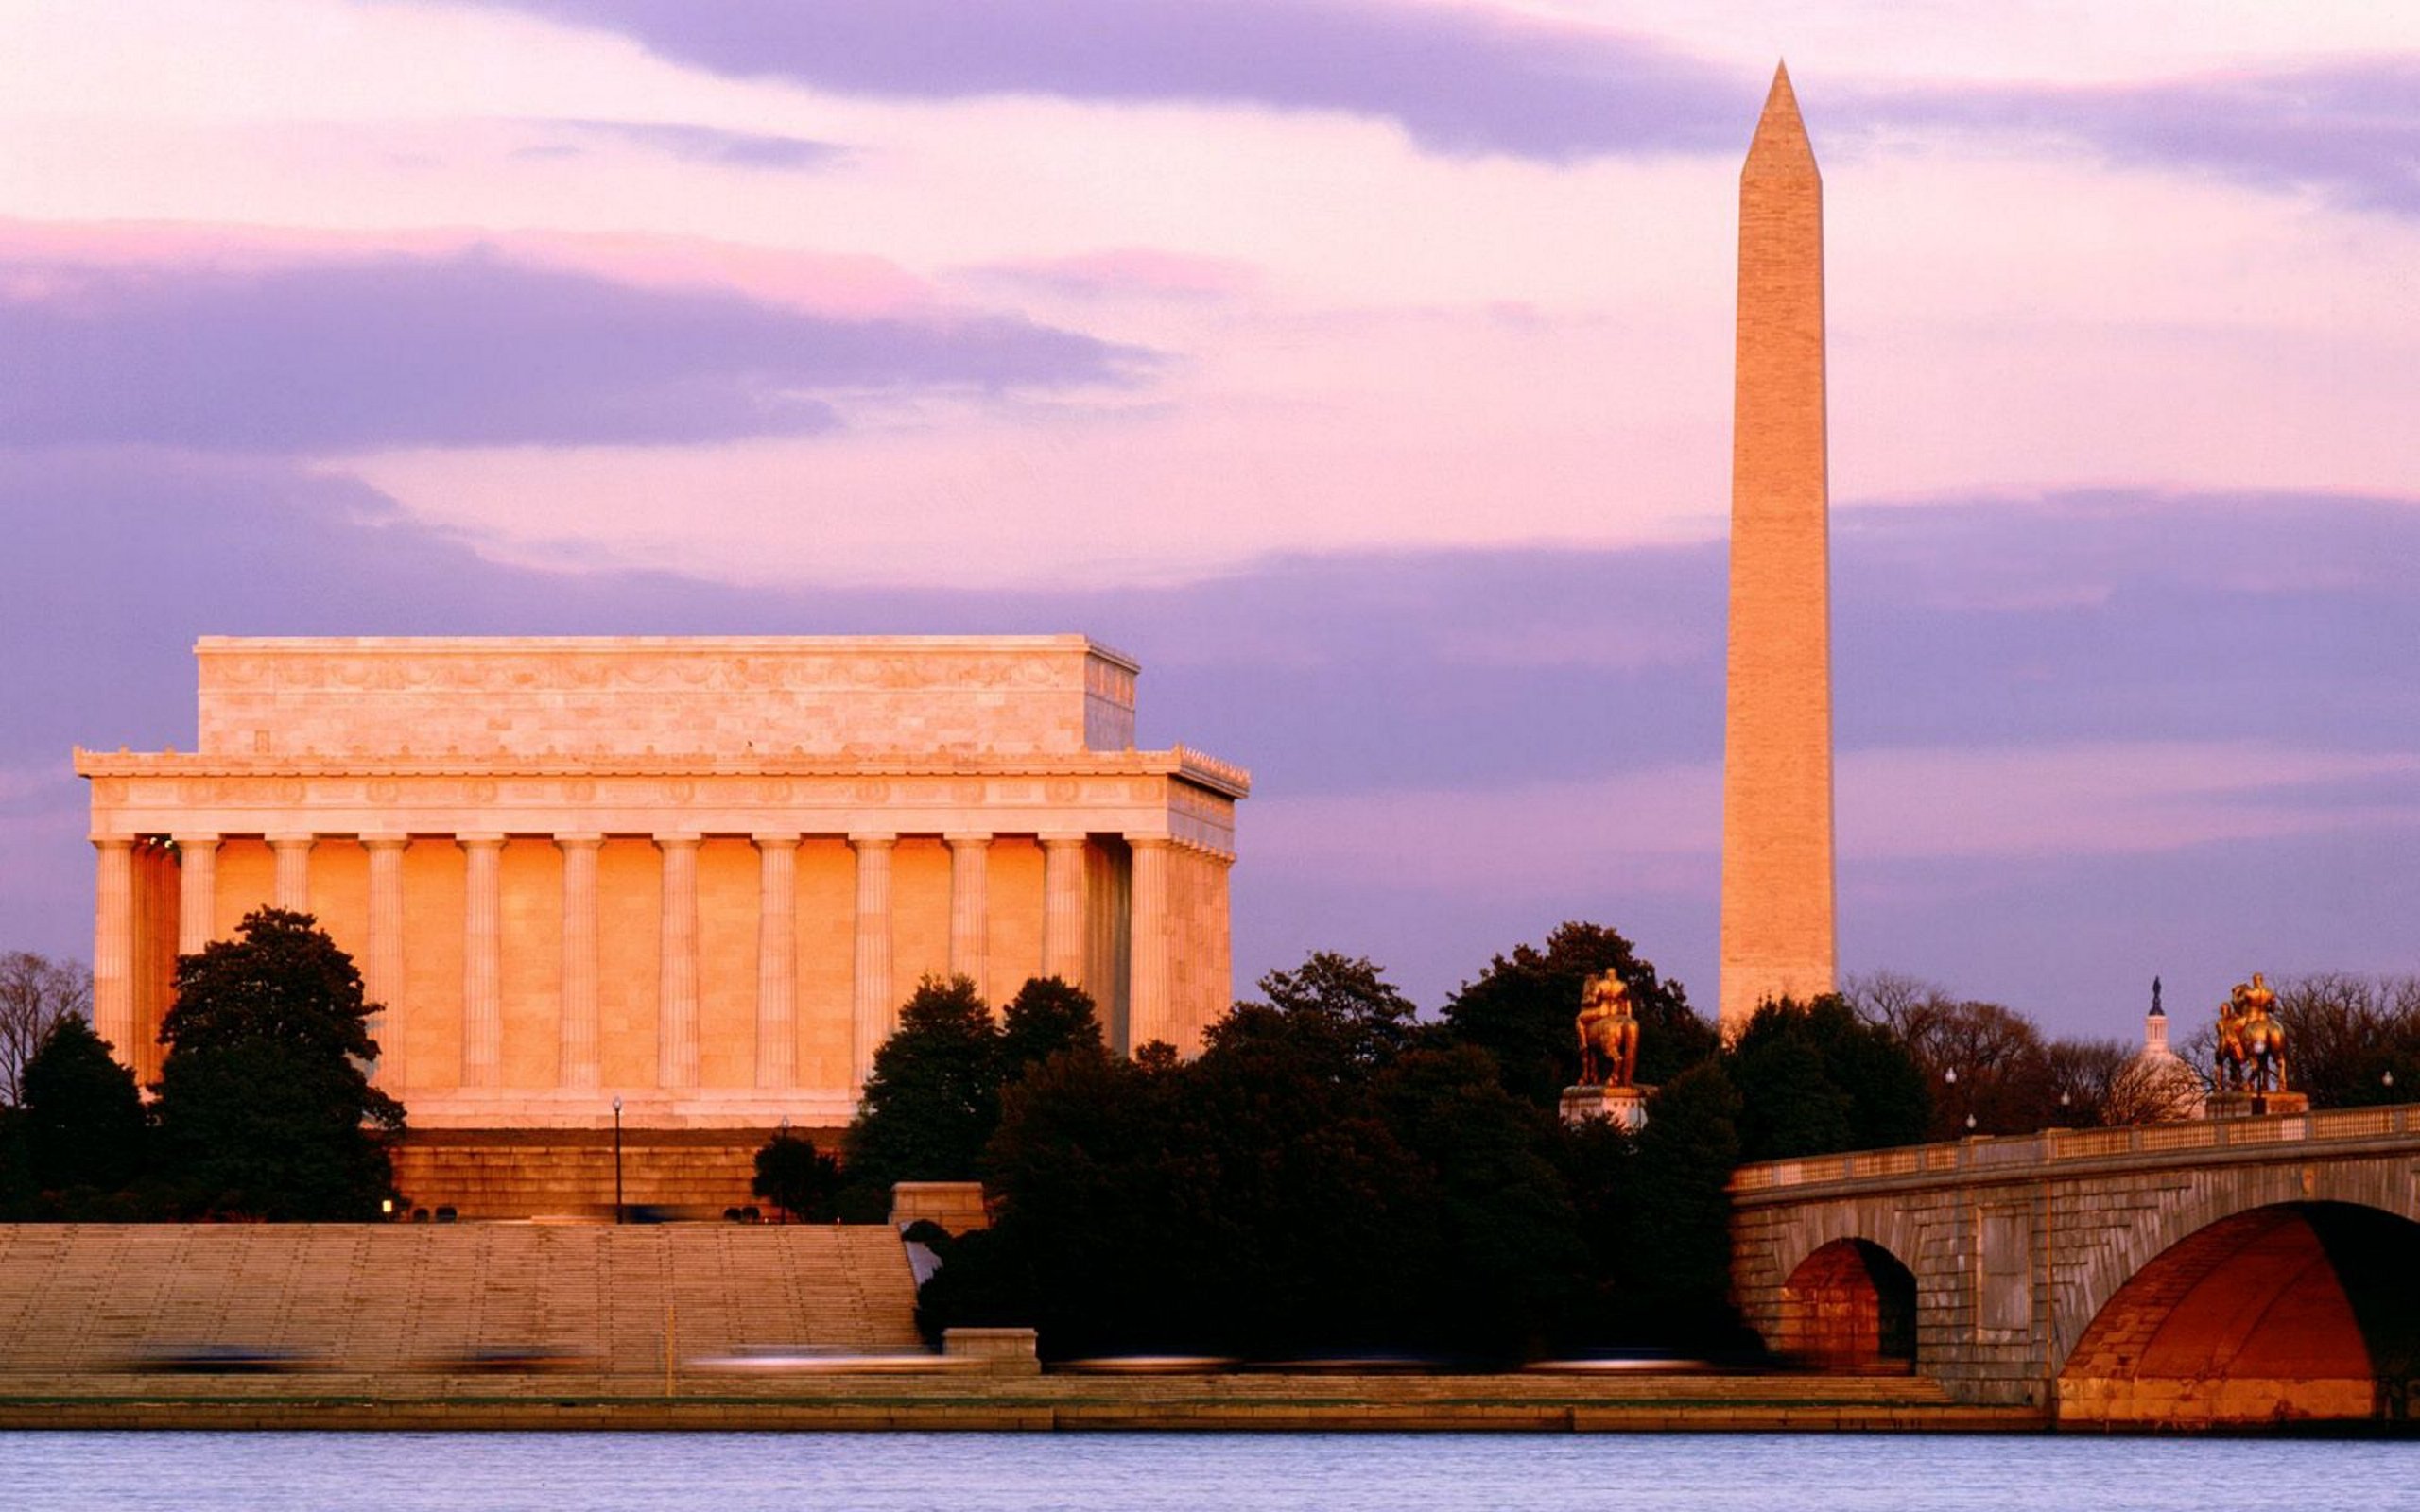 Washington Monument and Lincoln Memorial, Washington DC, 8:5